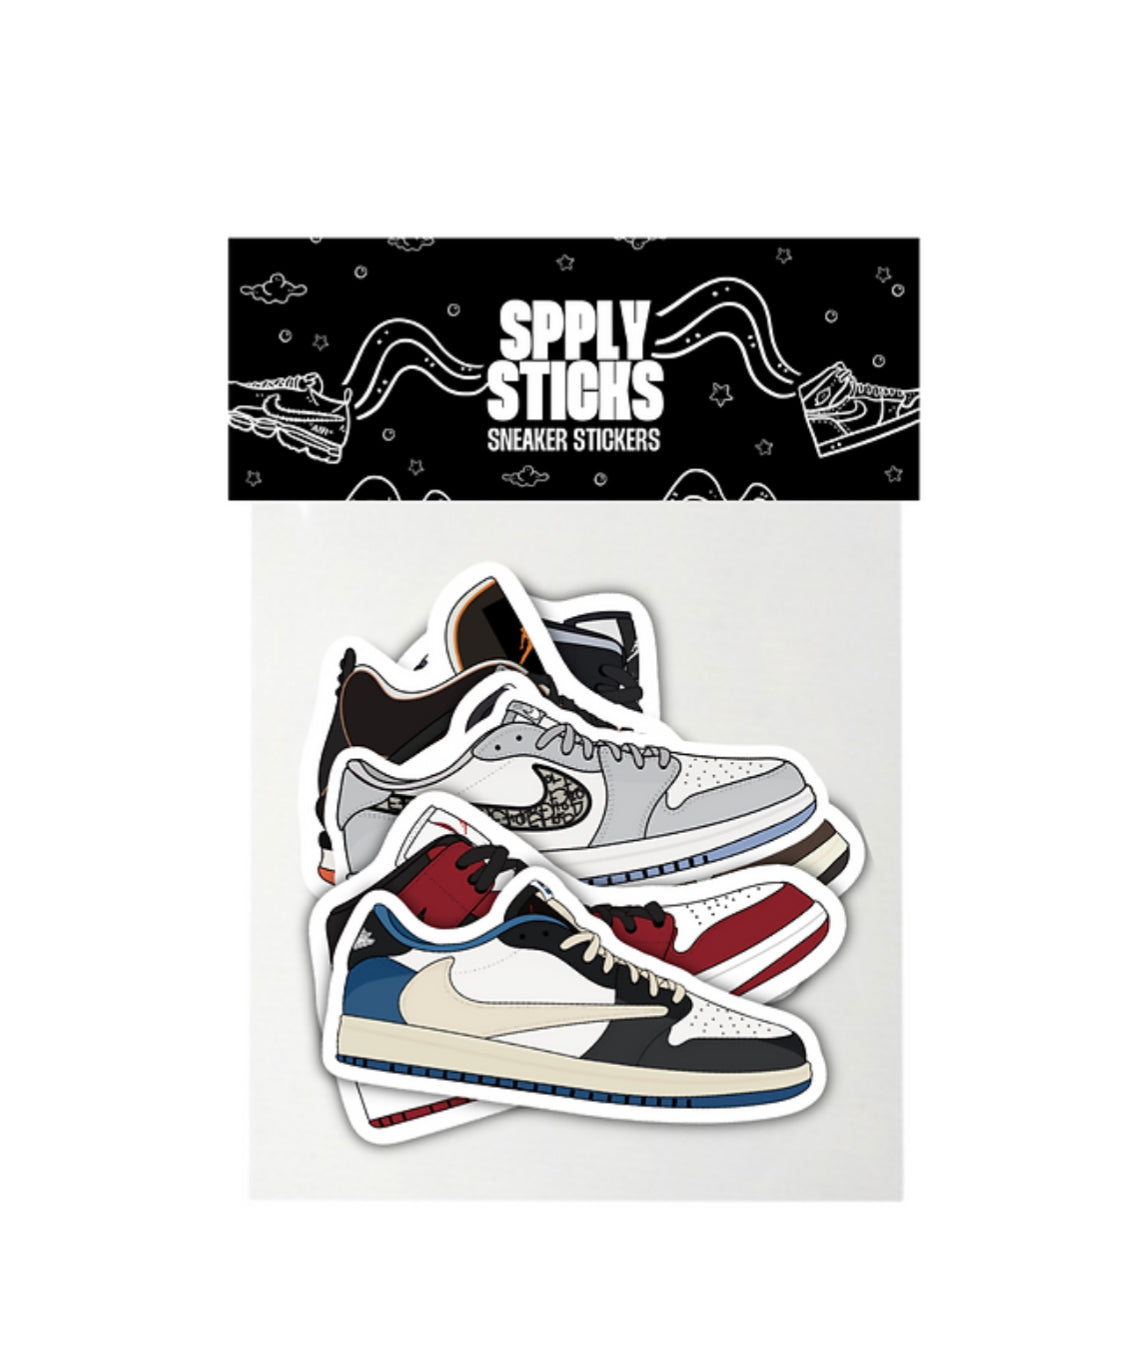 Contrast Clothing Worthing Nike Air 1 Jordan sneaker sticker pack from SPLY